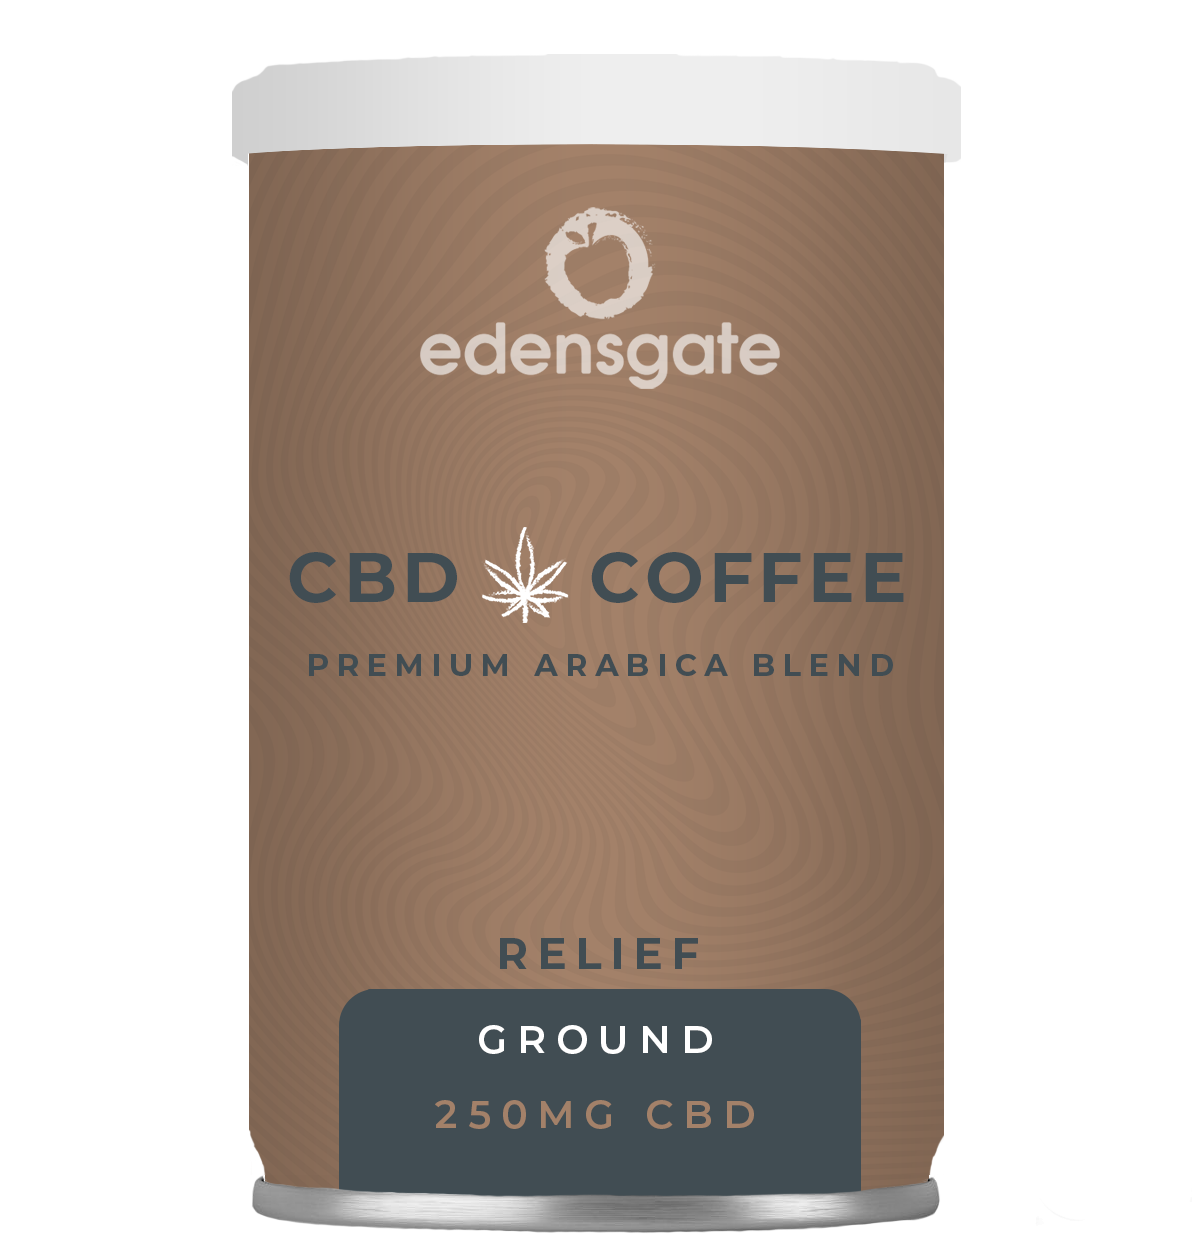 Ground CBD Coffee - 250mg